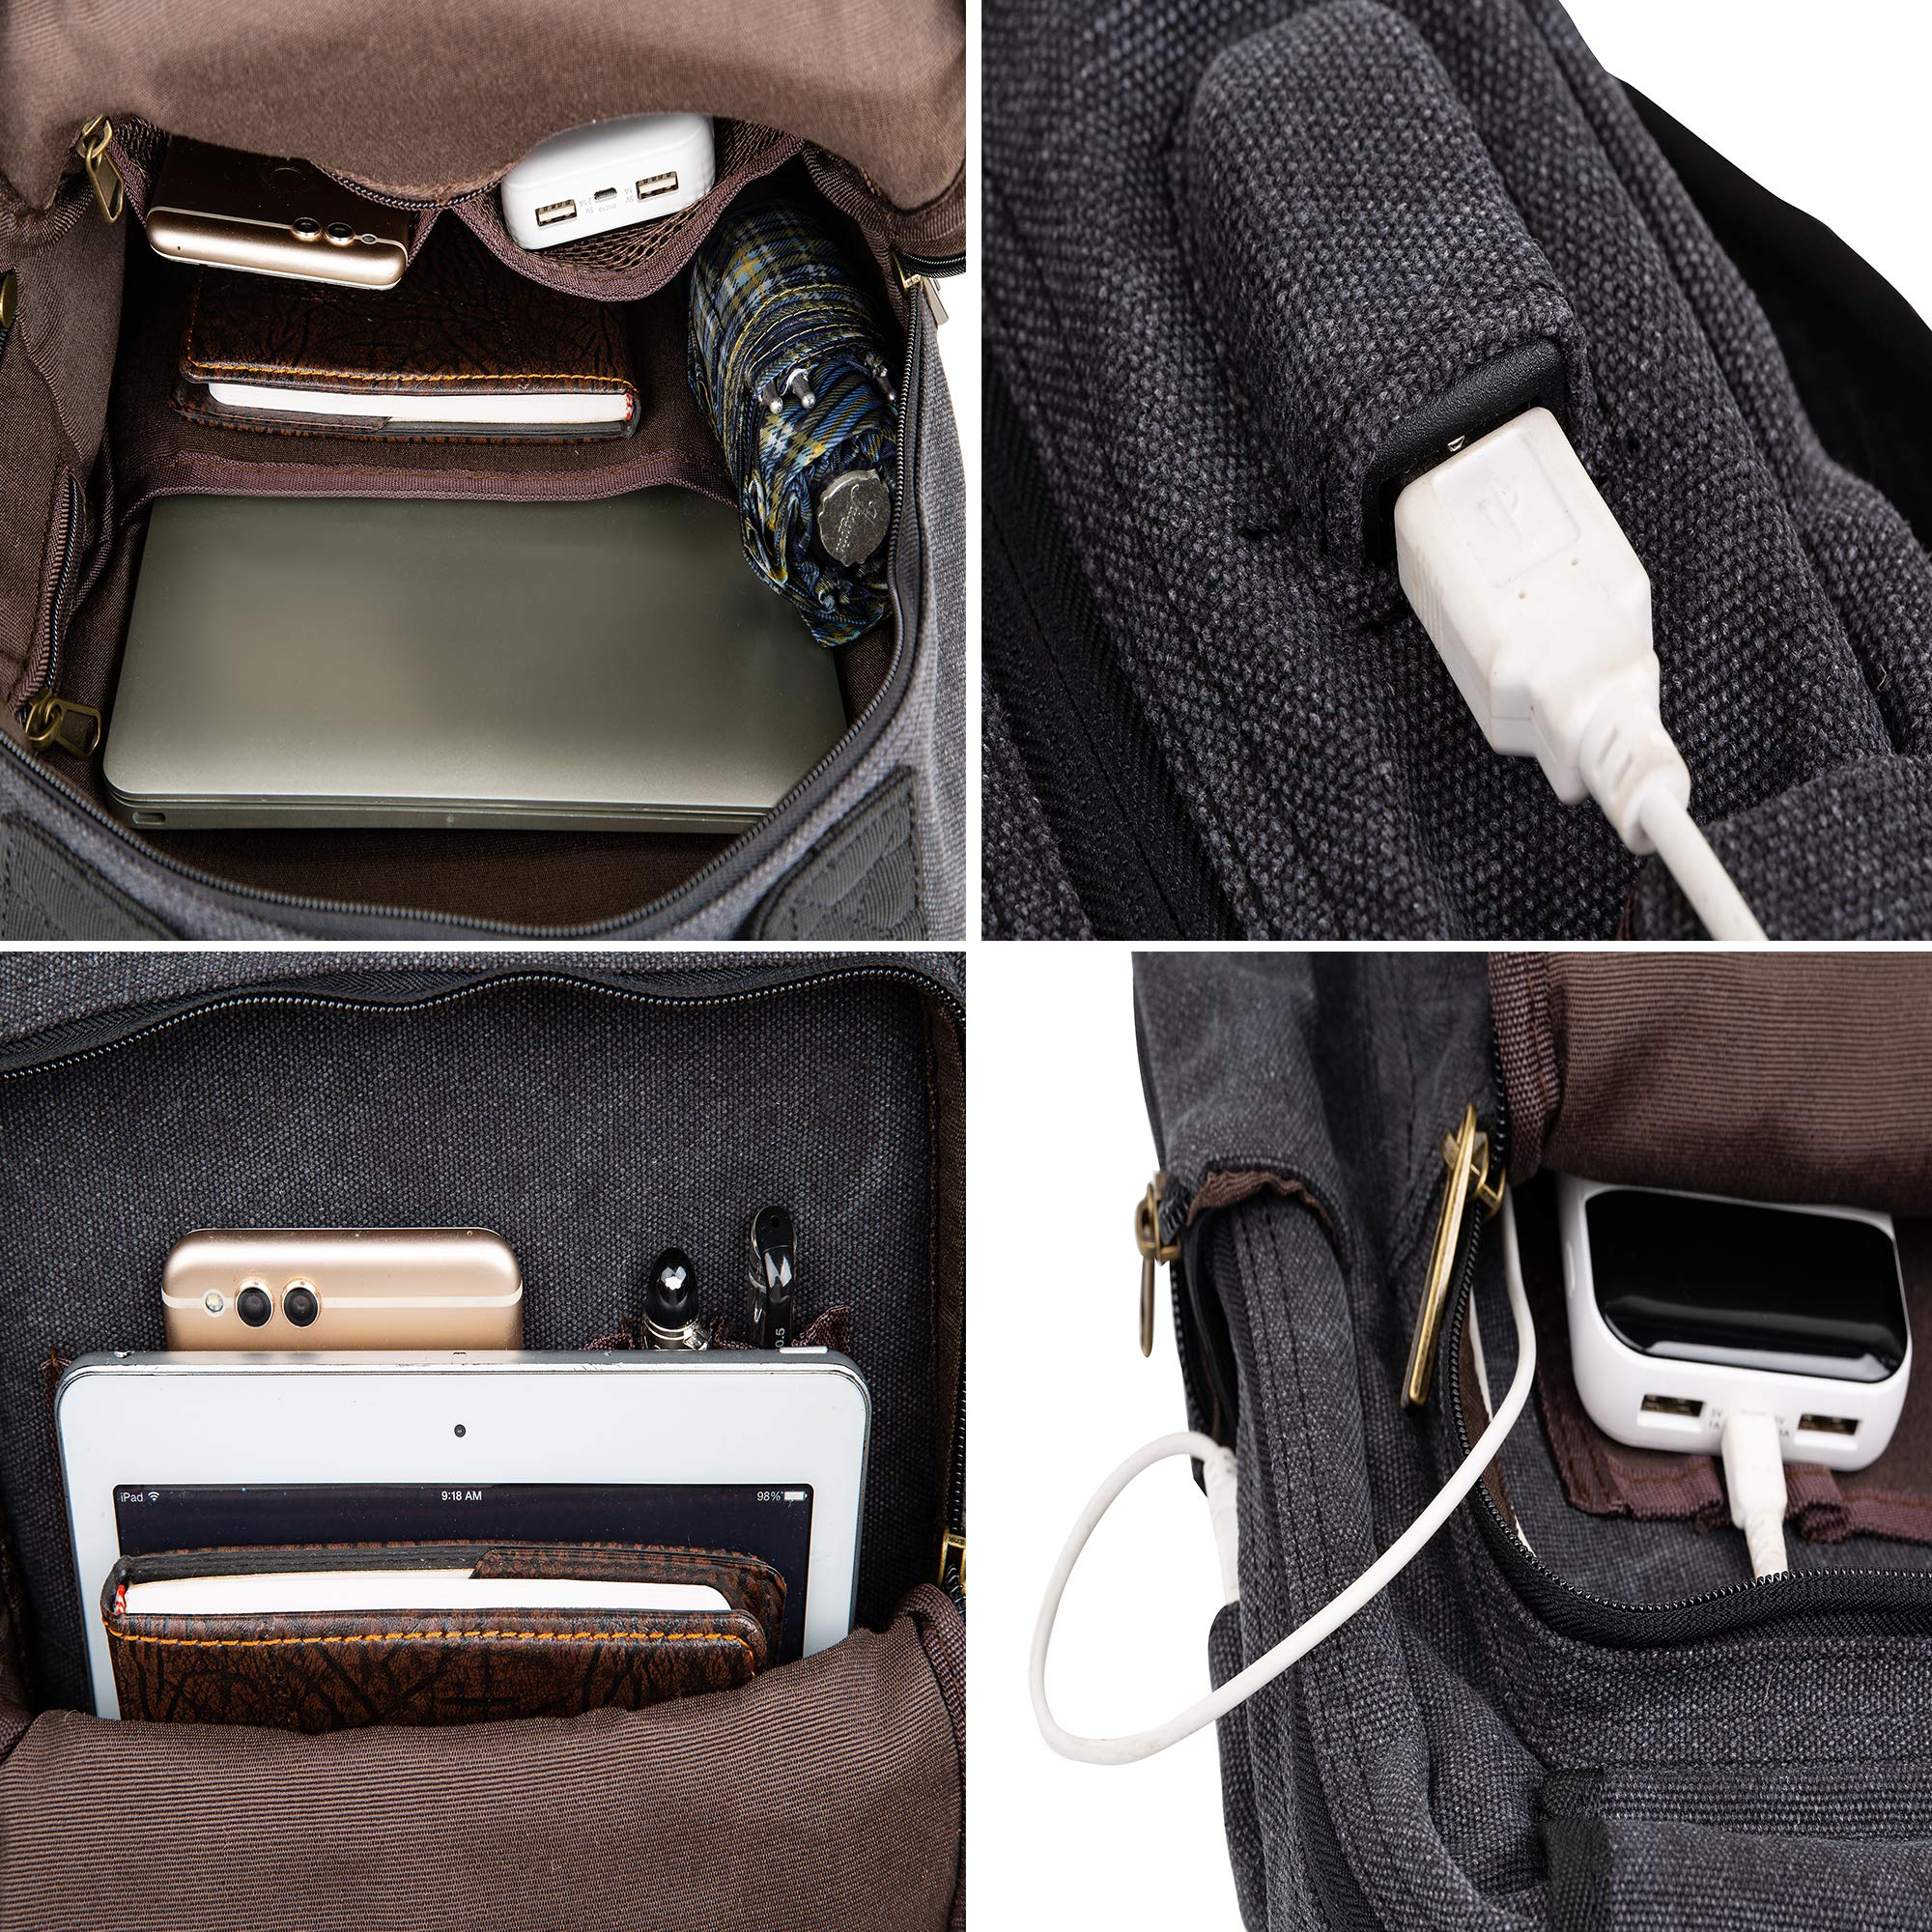 NICGID Sling Bags Chest Shoulder Backpacks, 13.3'' 14.1'' Laptop Backpack Crossbody Messenger Bag Travel Outdoor Men Women